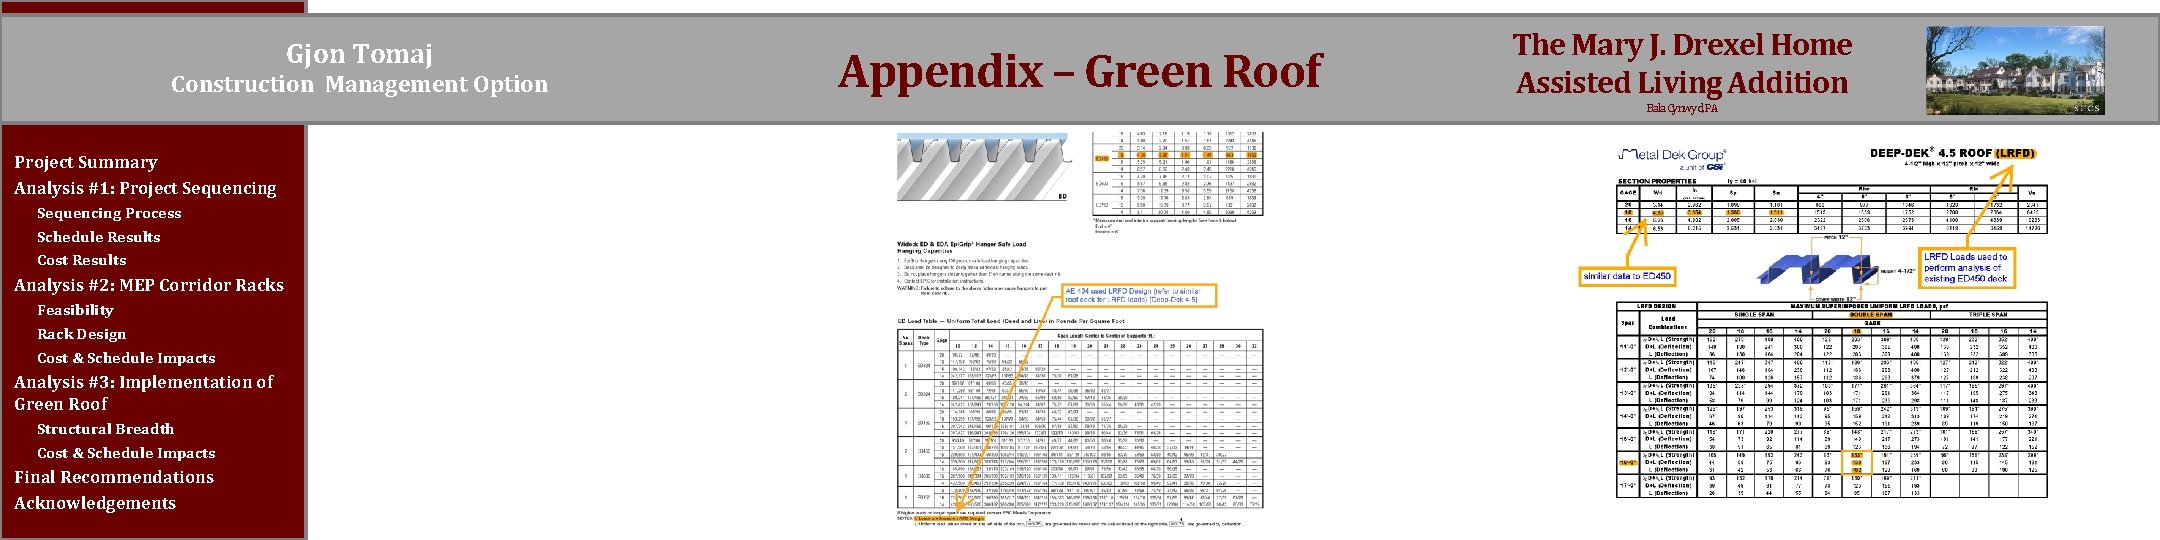 Gjon Tomaj Construction Management Option Appendix – Green Roof The Mary J. Drexel Home